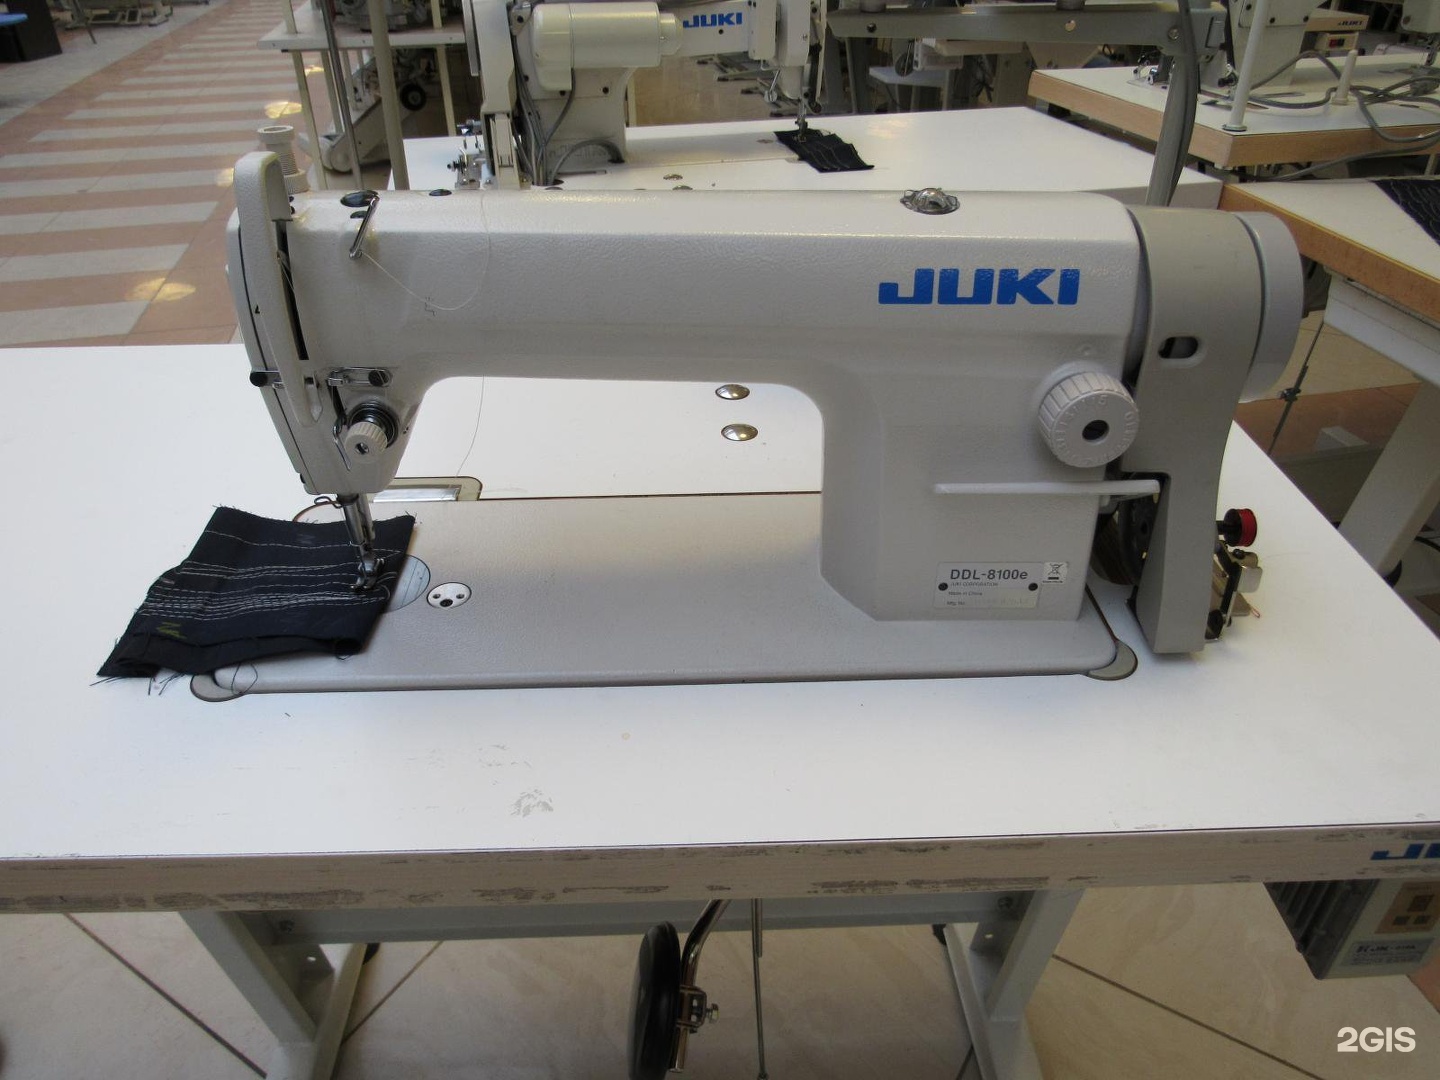 Промышленная машинка juki. Juki 8100 швейная машина. Juki DMN-5420nfa-7-WB/AK-85. Швейная машина Juki DDL-7000a-7. Промышленная швейная машина Juck JK-t20u53d.